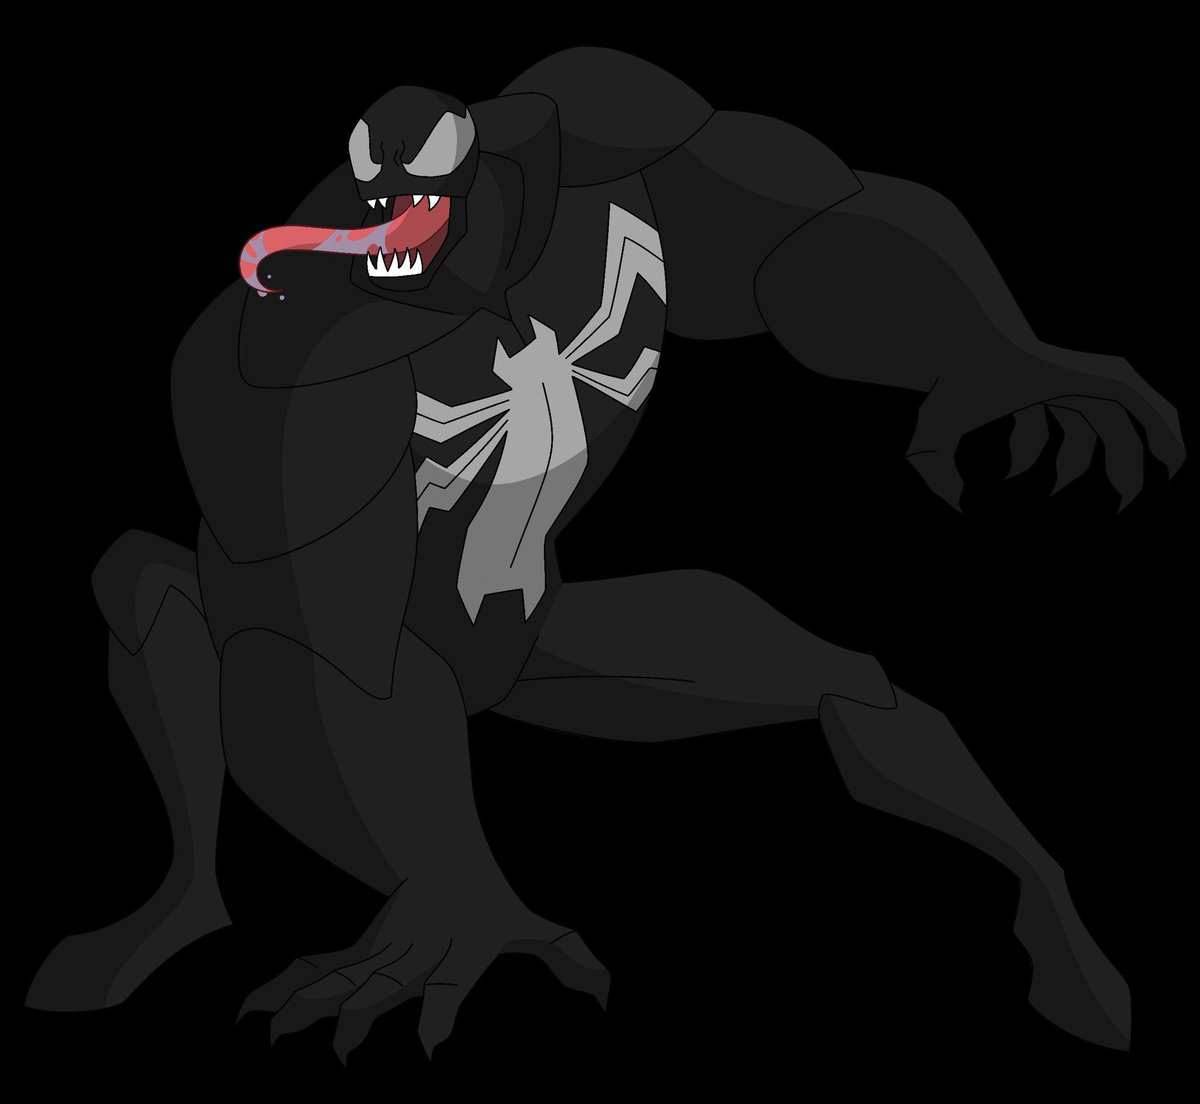 RT @EARTH_26496: Perfect Venom design

– The Spectacular Spider-Man (2008) https://t.co/vIchOik6aQ